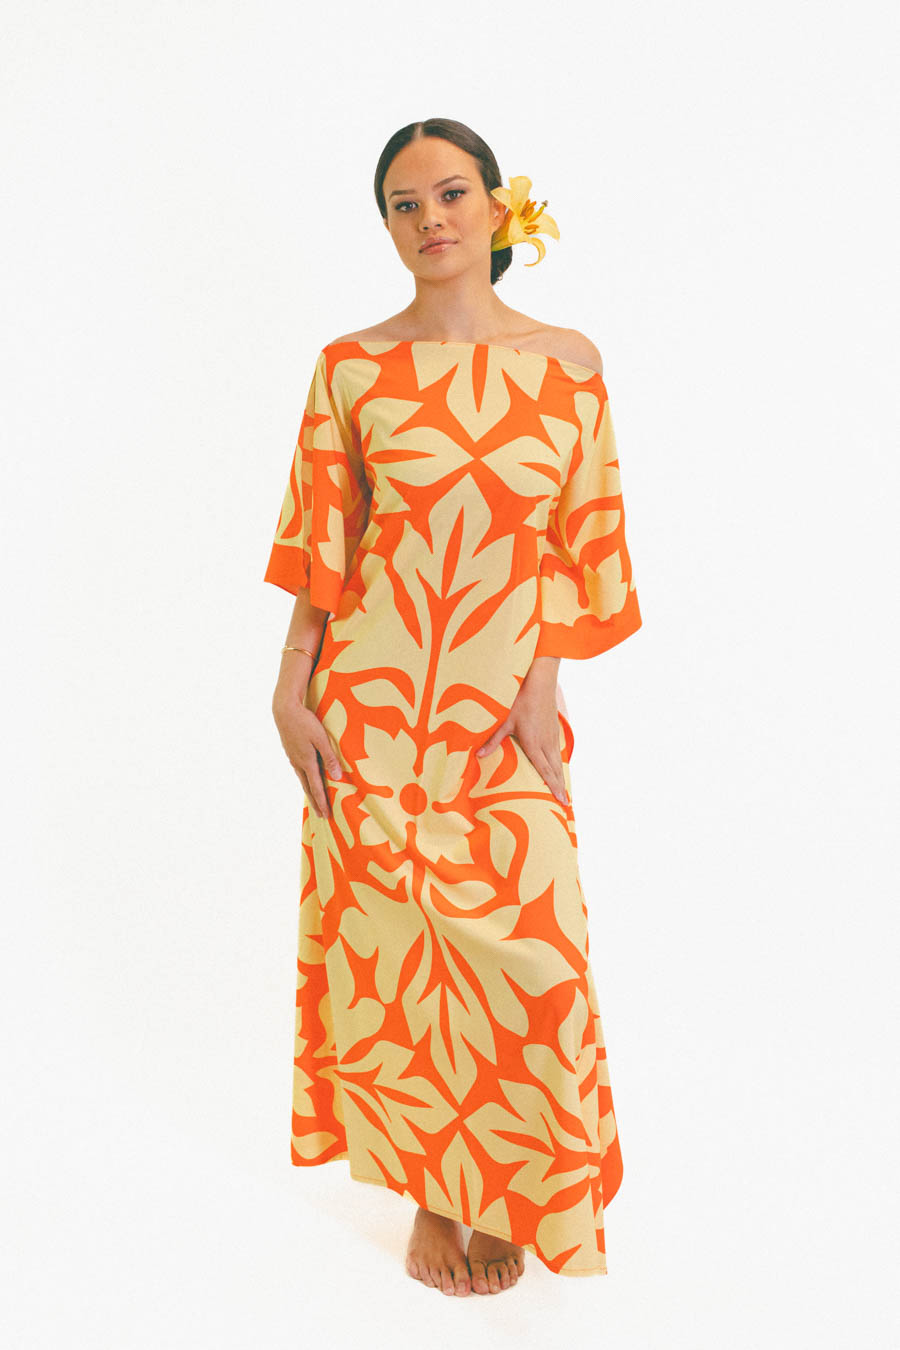 Aimata Tahiti Collection Wardrobe Dress Tehere Orange Yellow